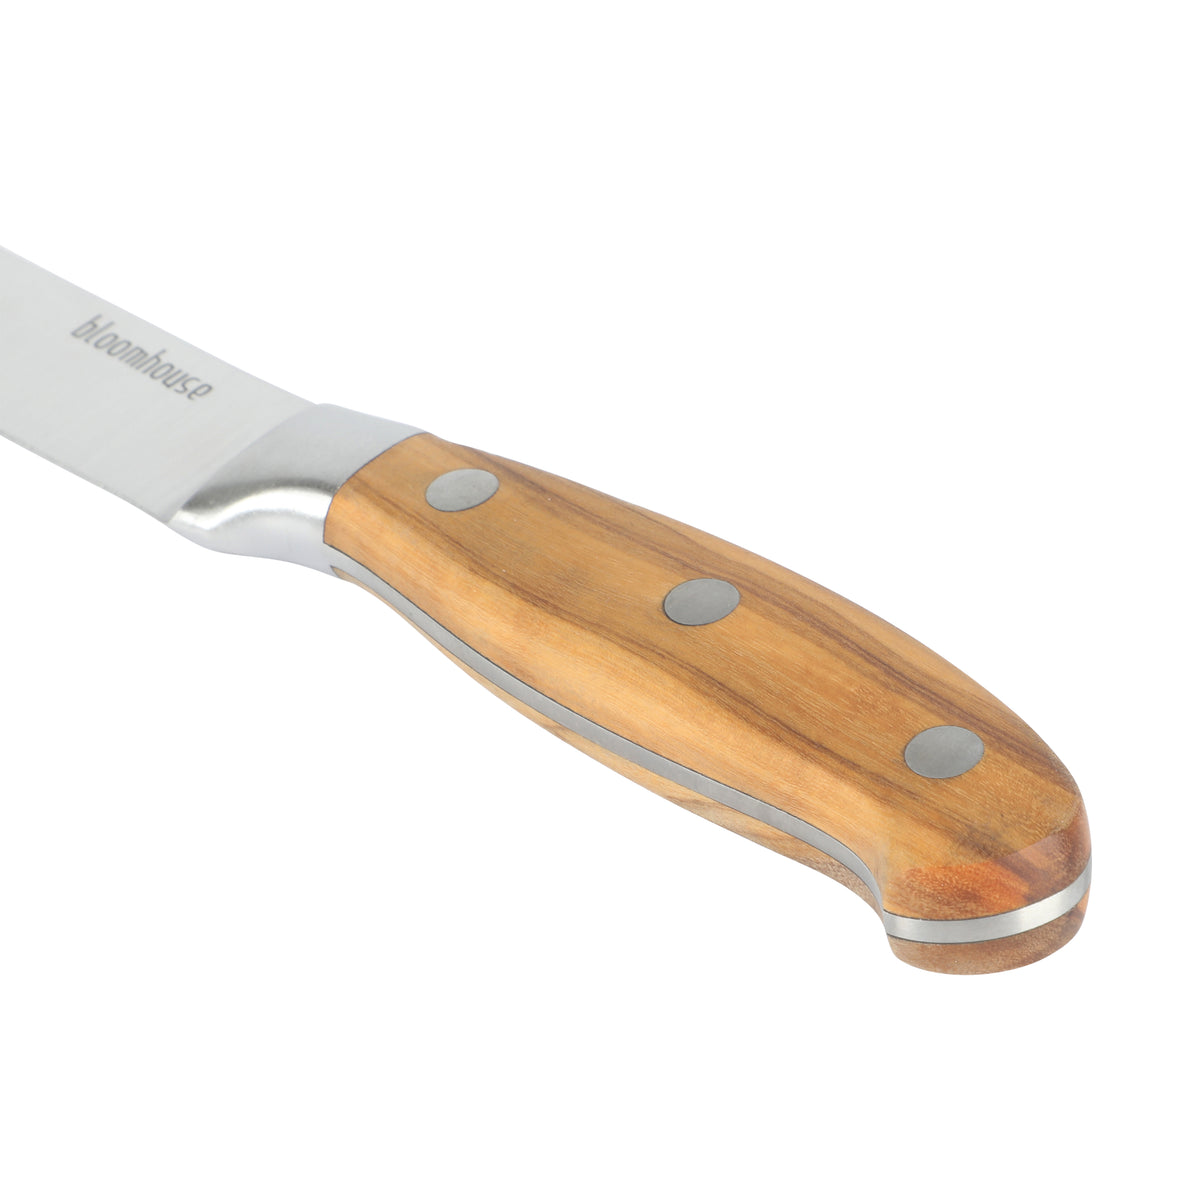 Utility Knife: 5 Inch Blade